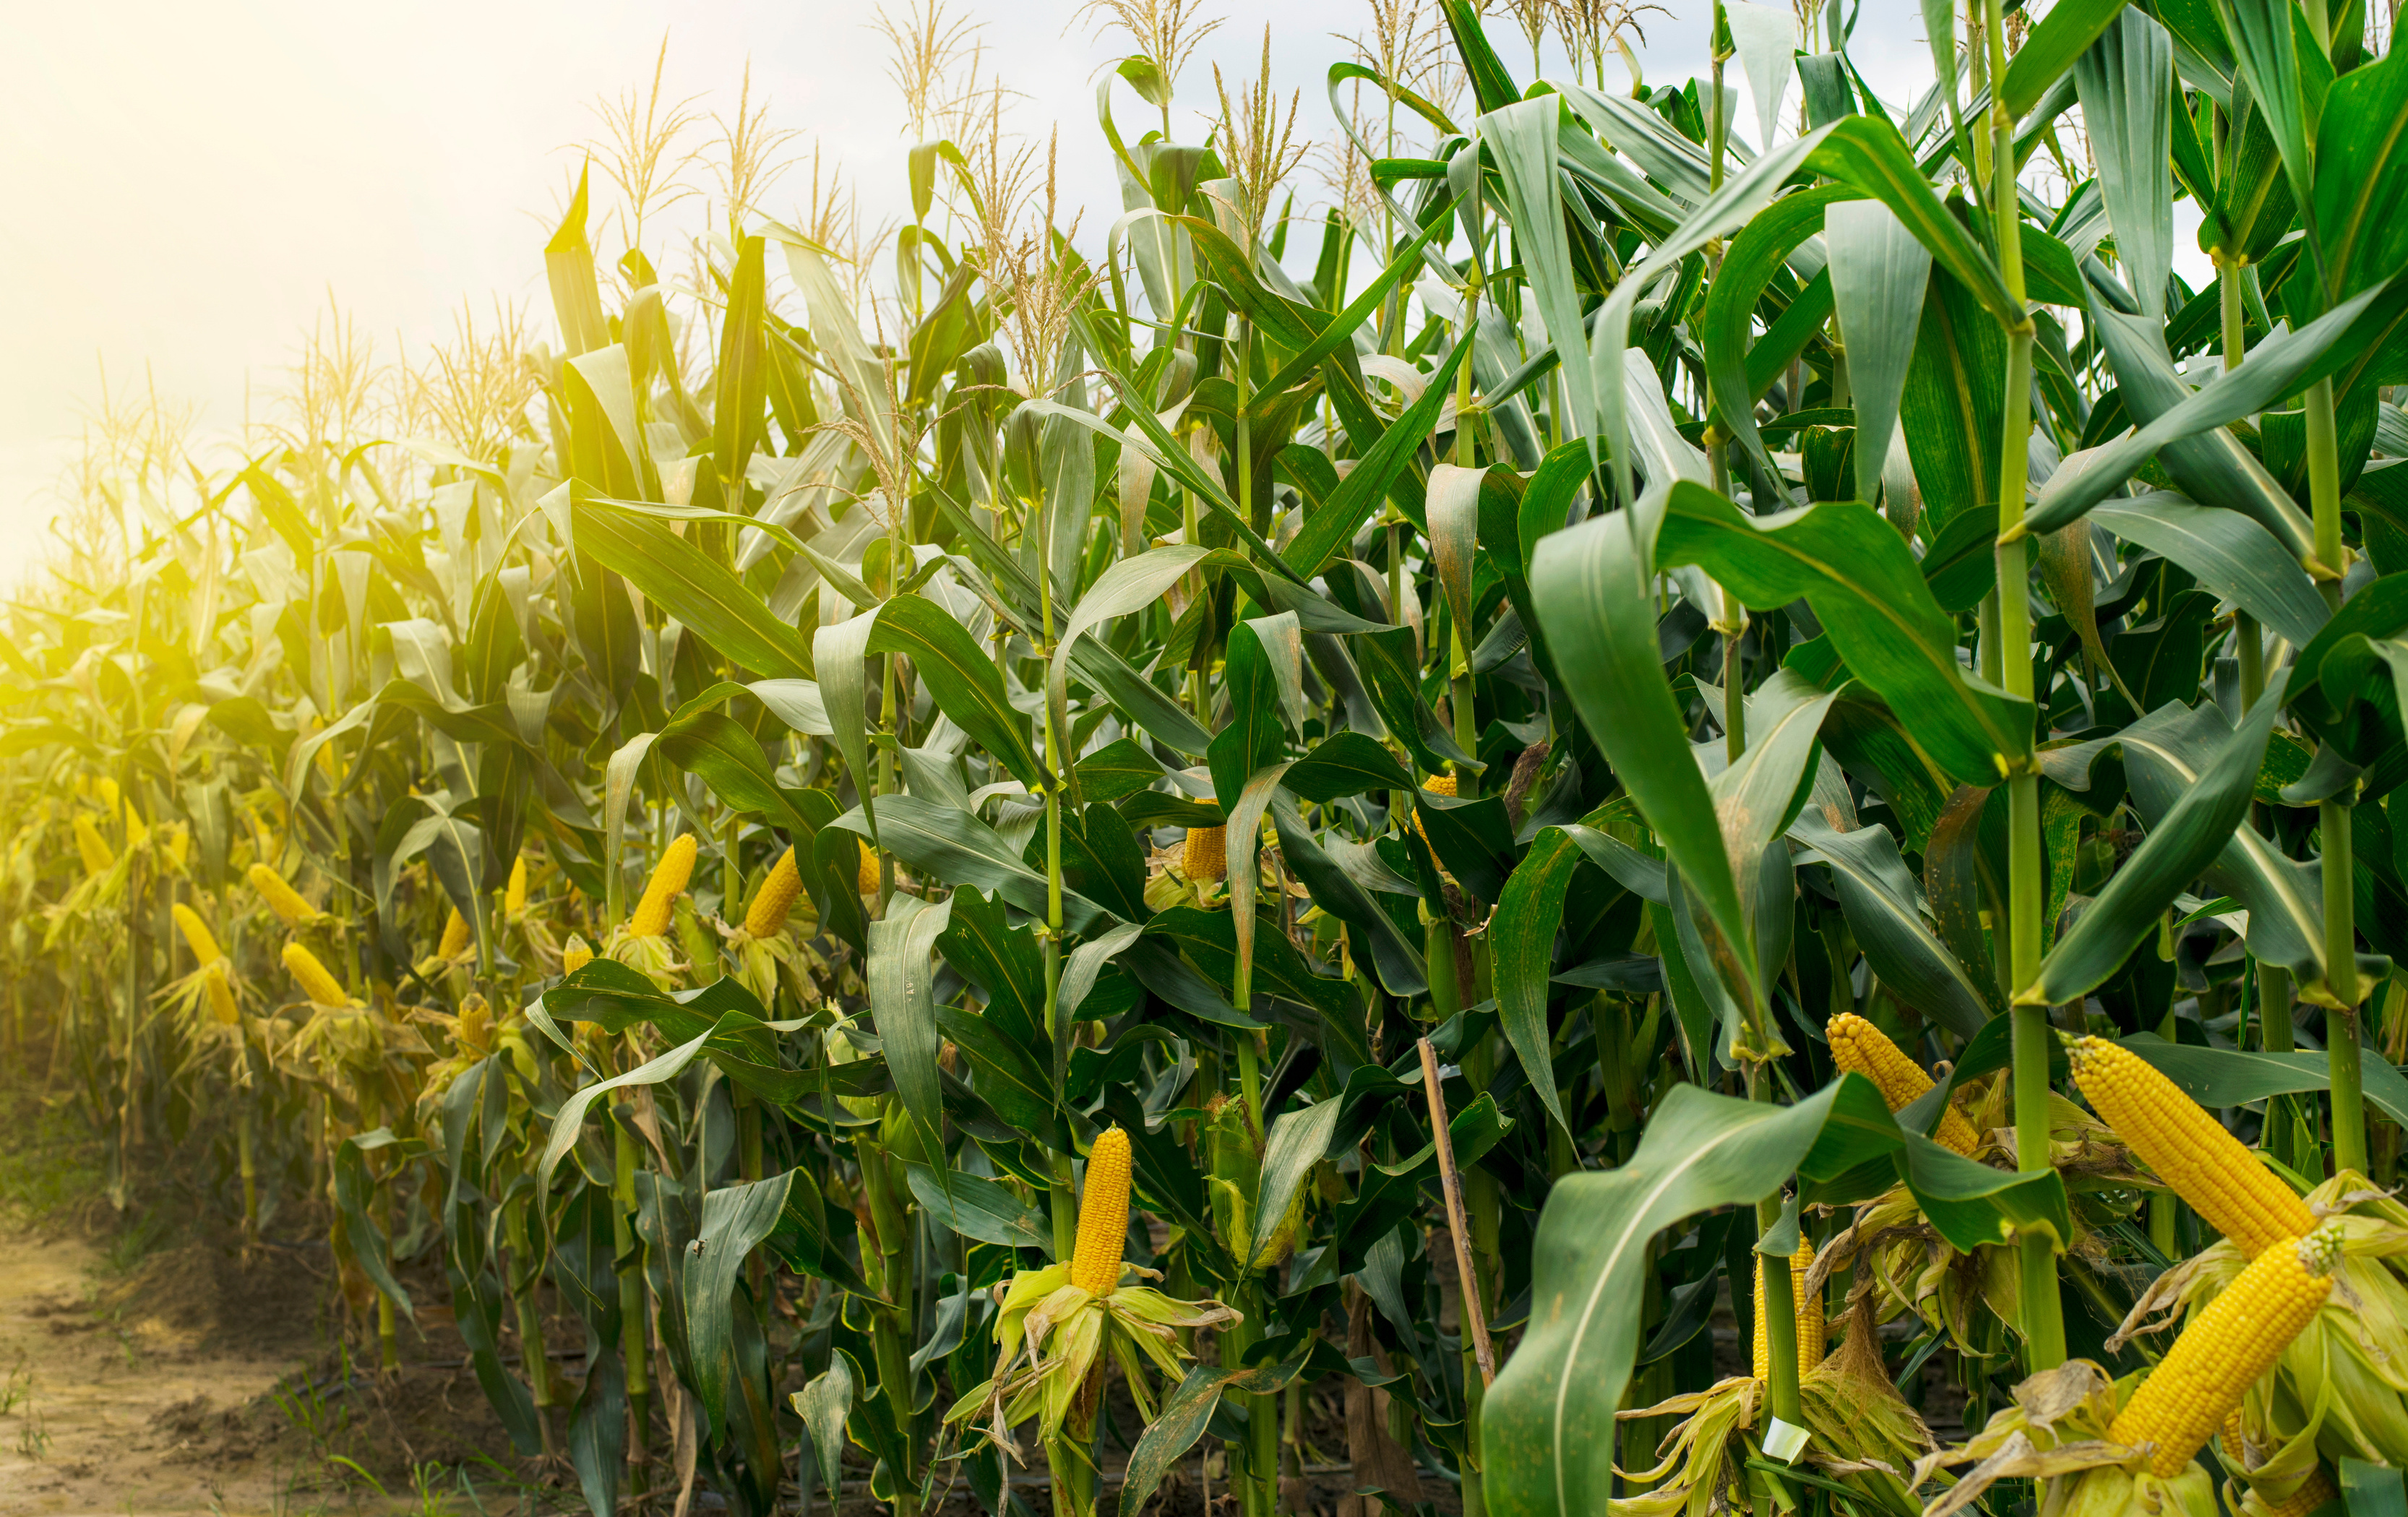 Corn Field at Sunset